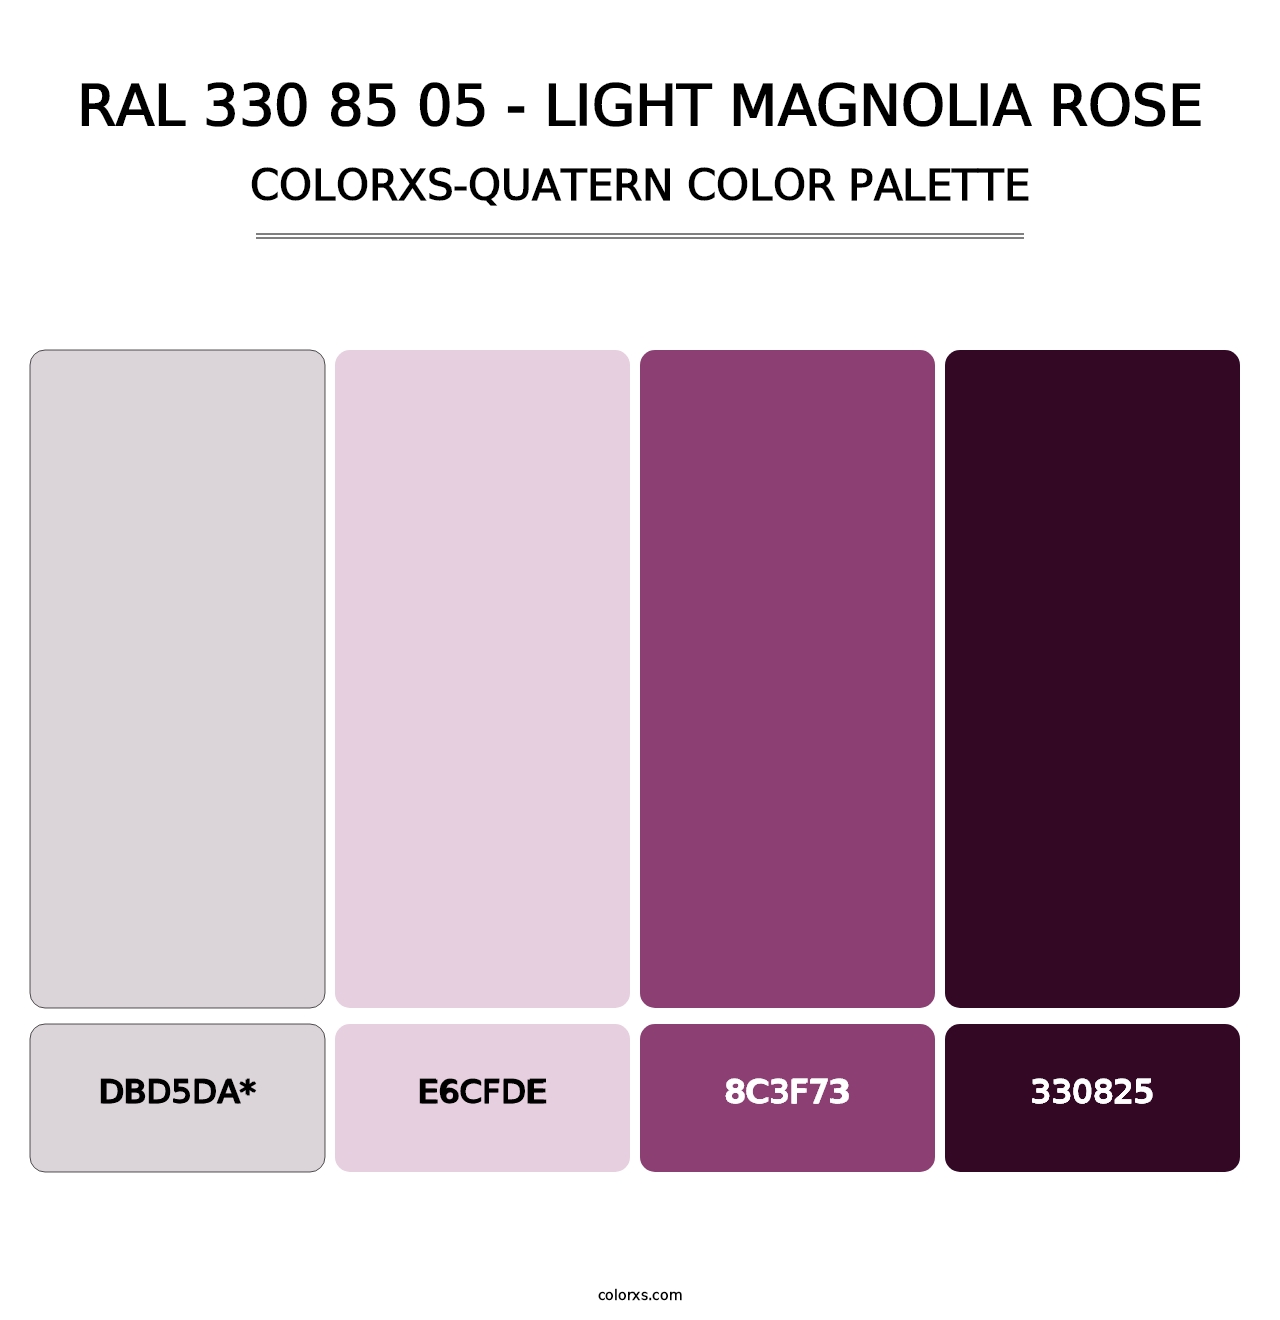 RAL 330 85 05 - Light Magnolia Rose - Colorxs Quatern Palette